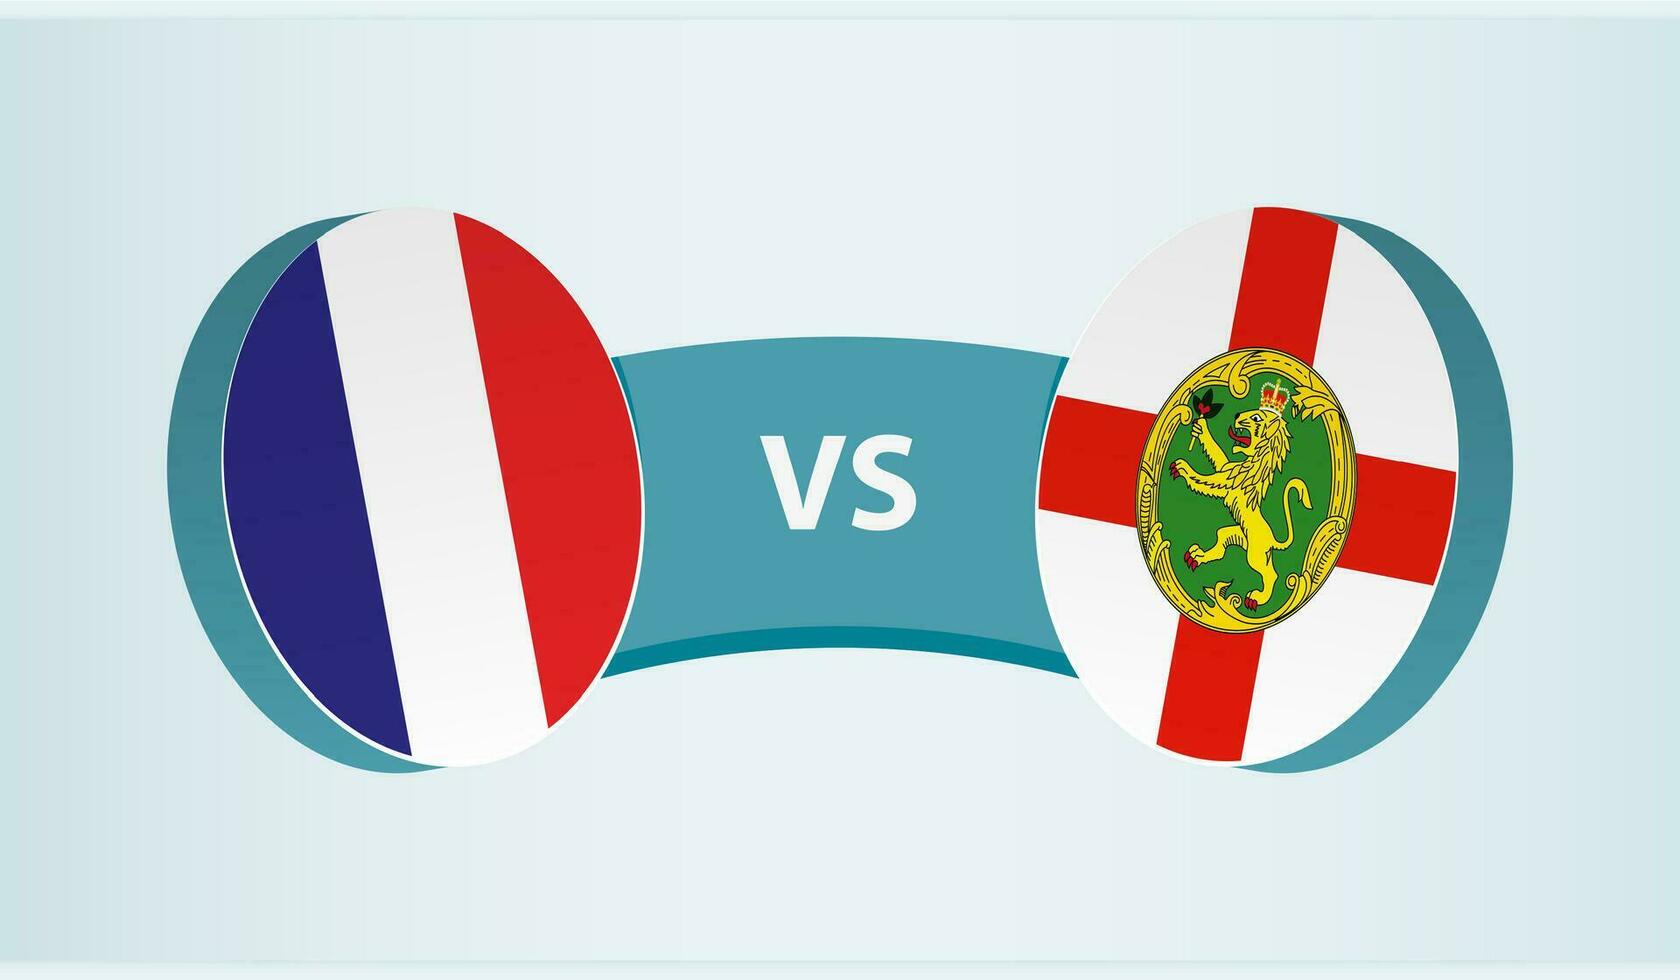 France versus Alderney, team sports competition concept. vector